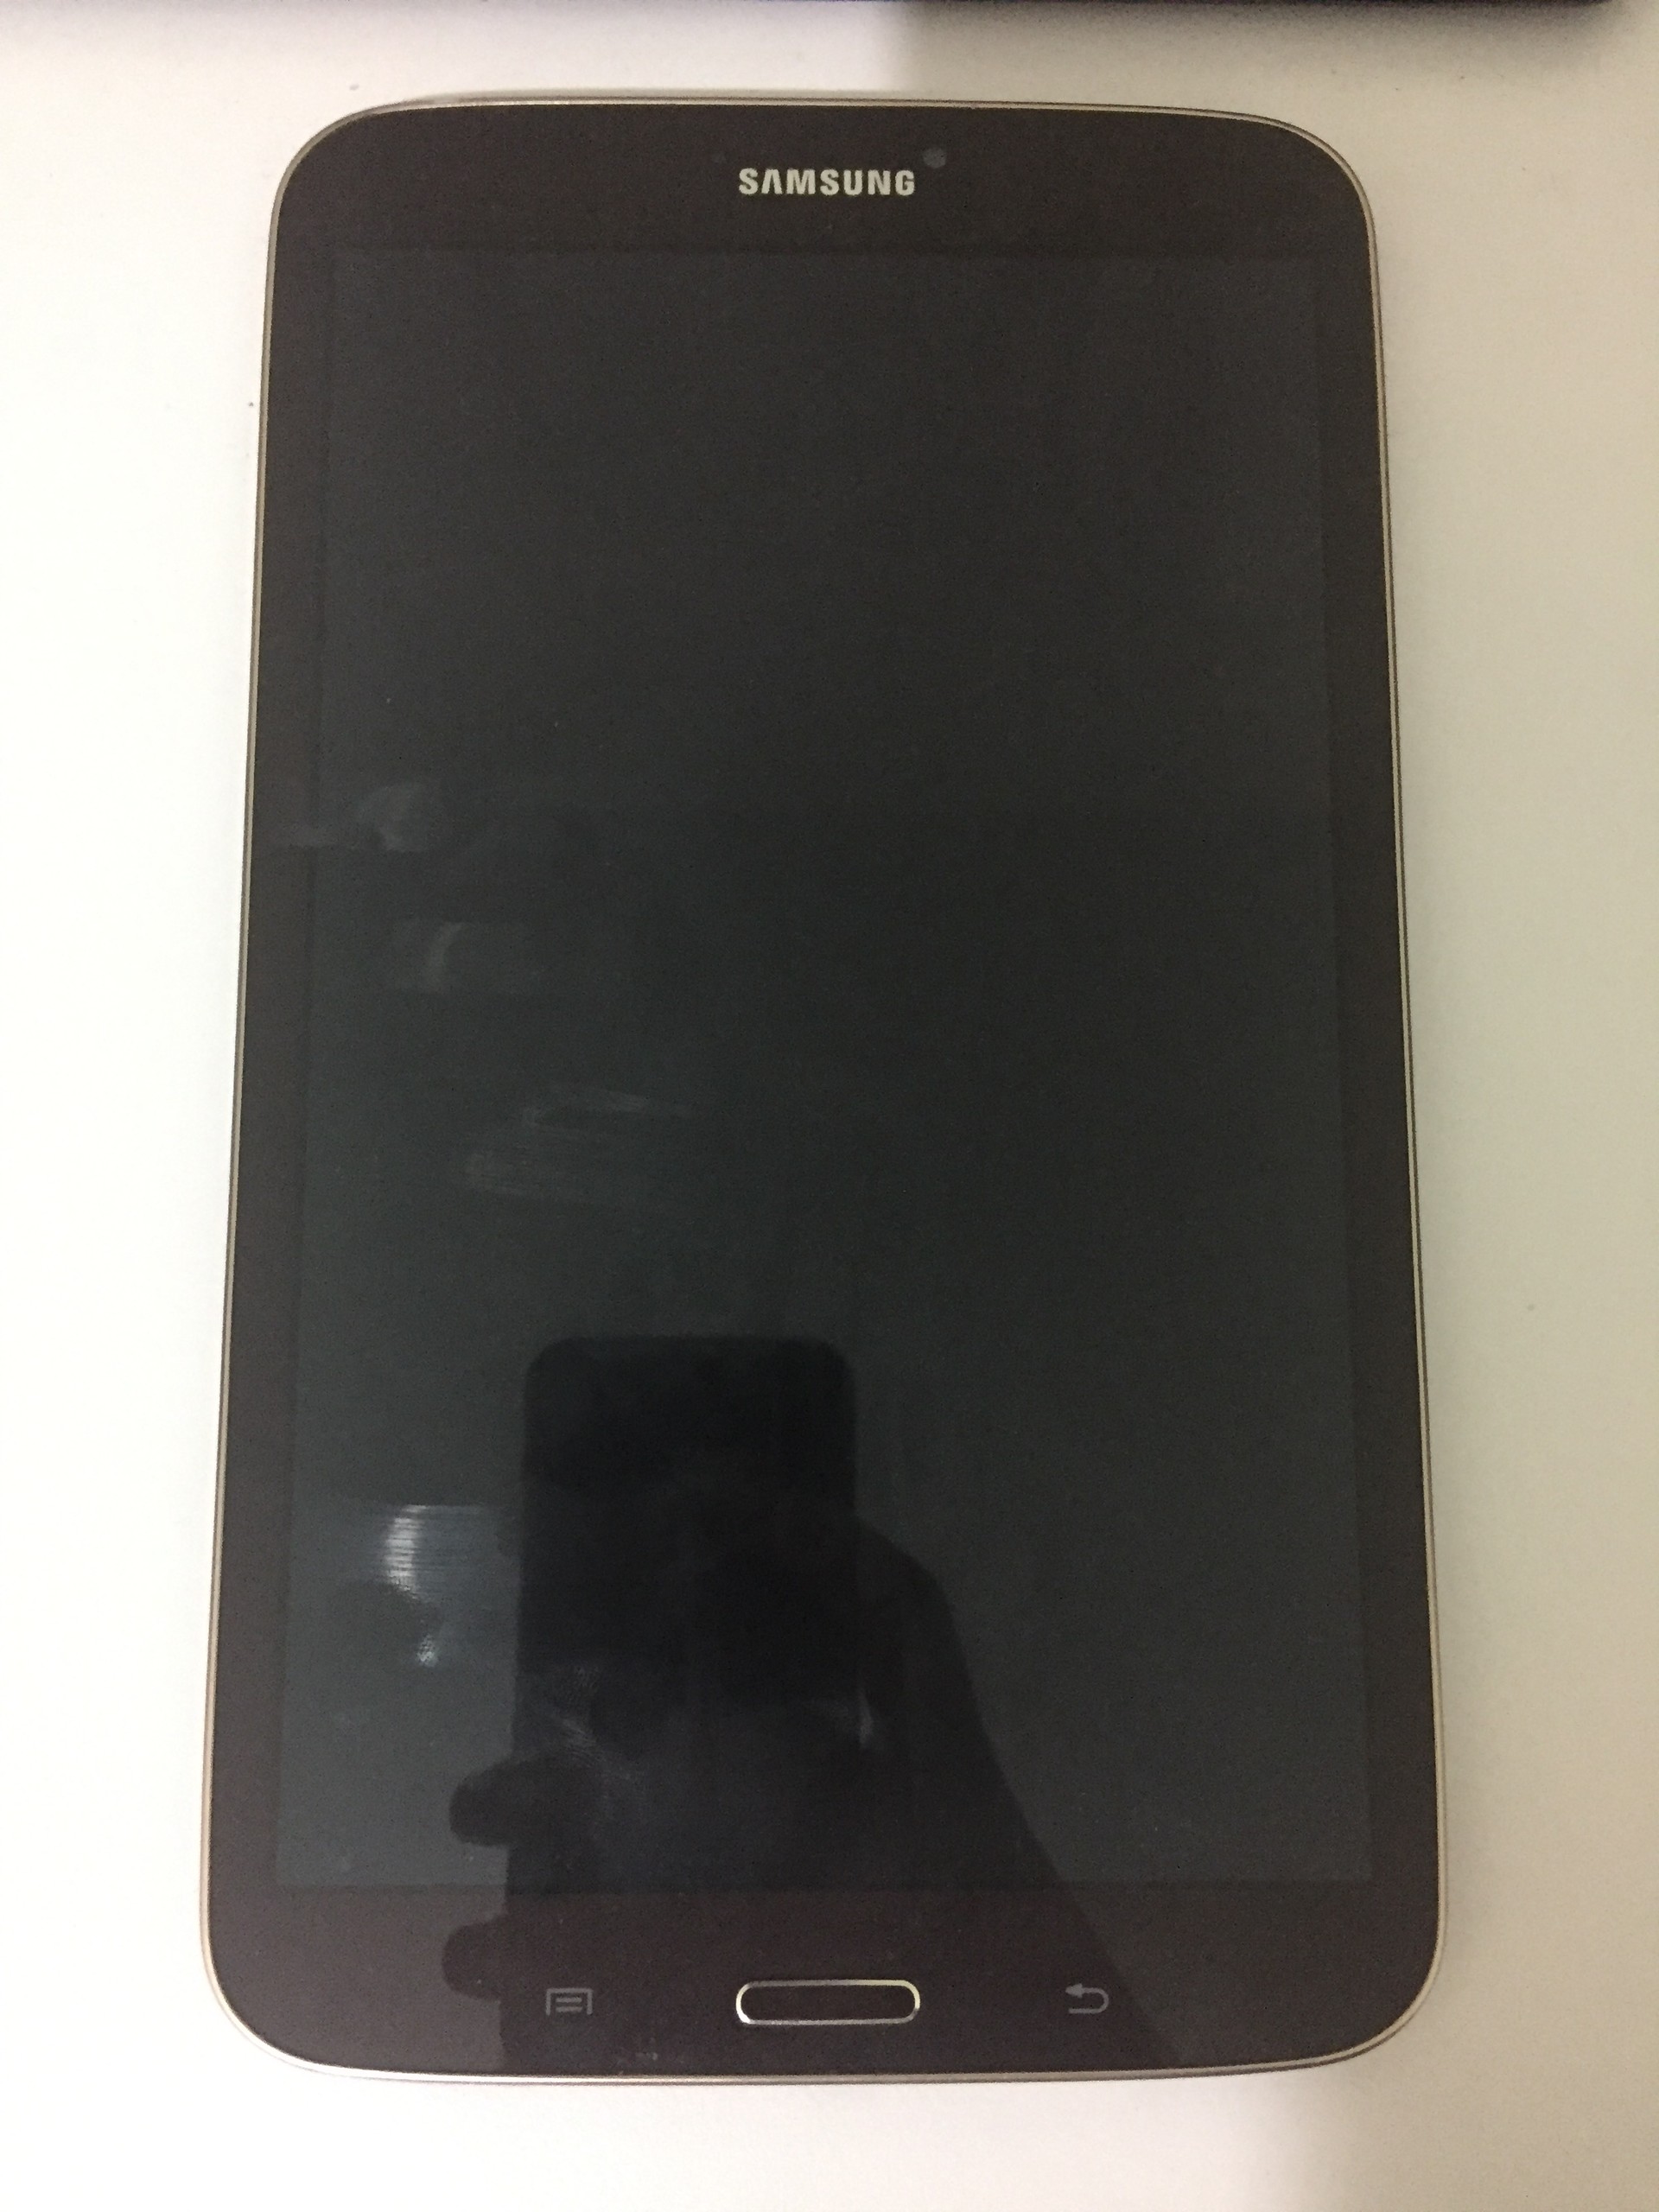 Samsung Galaxy Tab 3 8.0 Tablet == > 300 TL